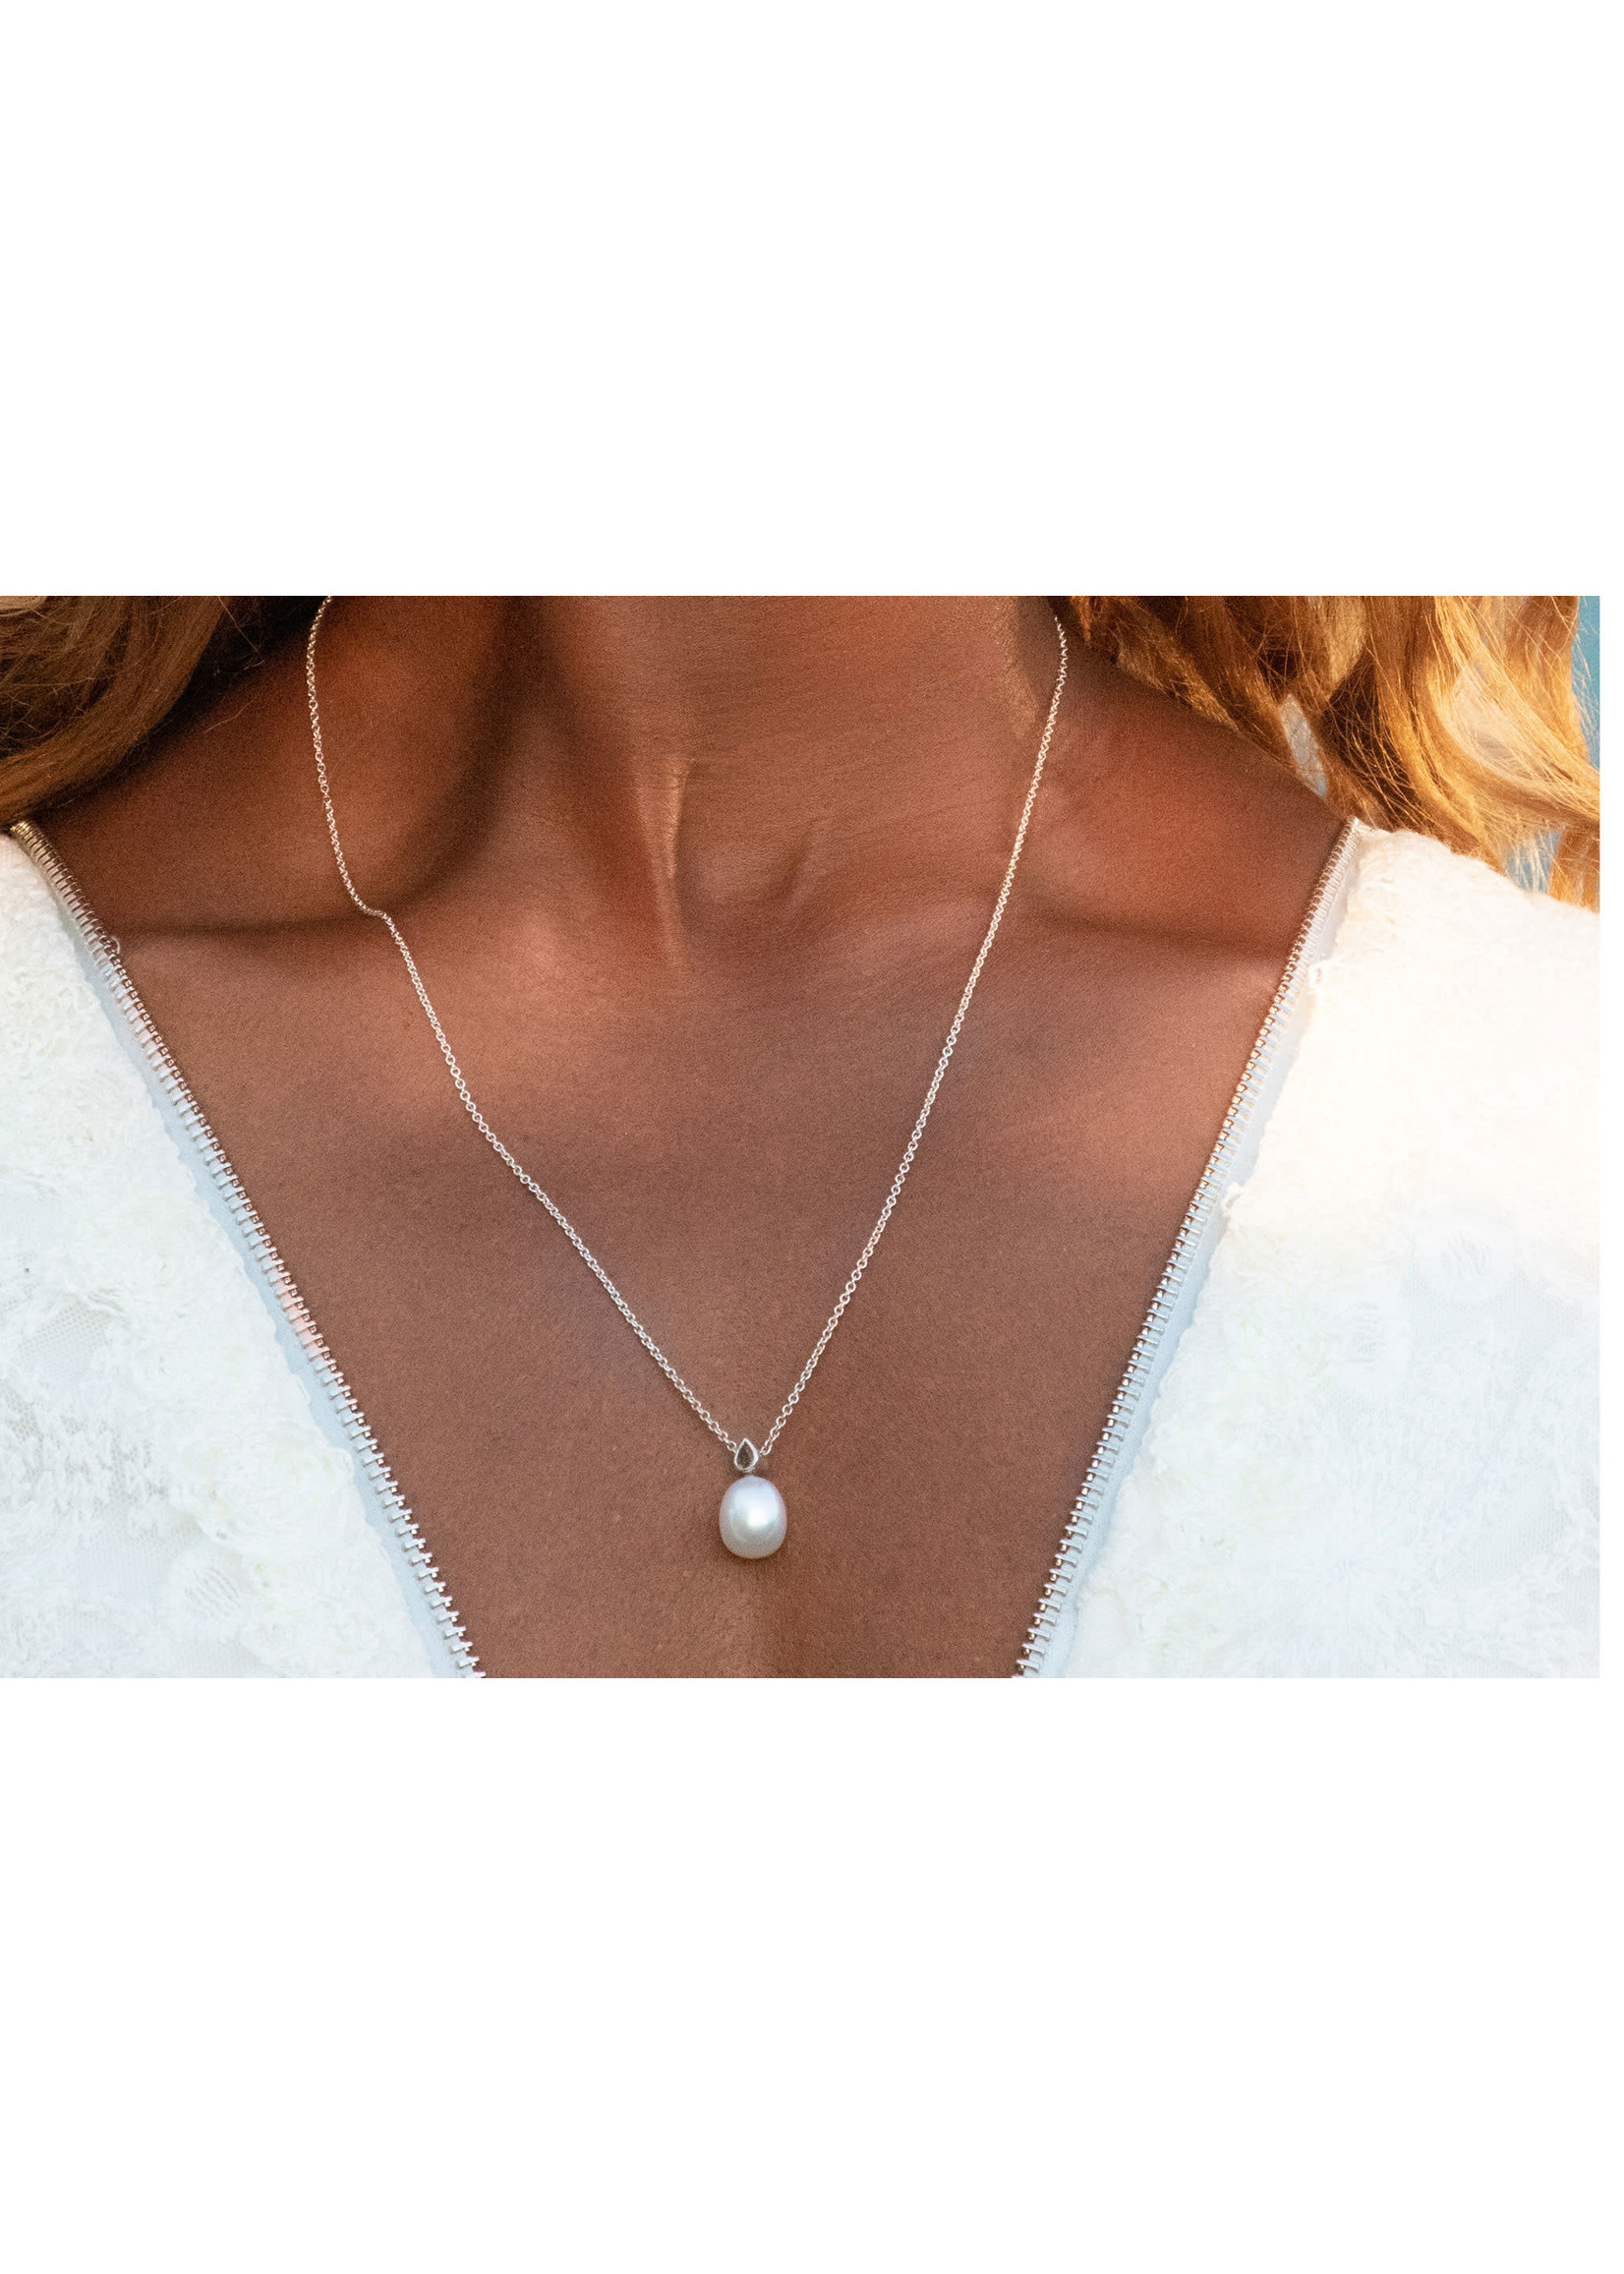 Michaela Farkasovska Designs PEARL DROP SLIDING NECKLACE, GOLD (white pearl)